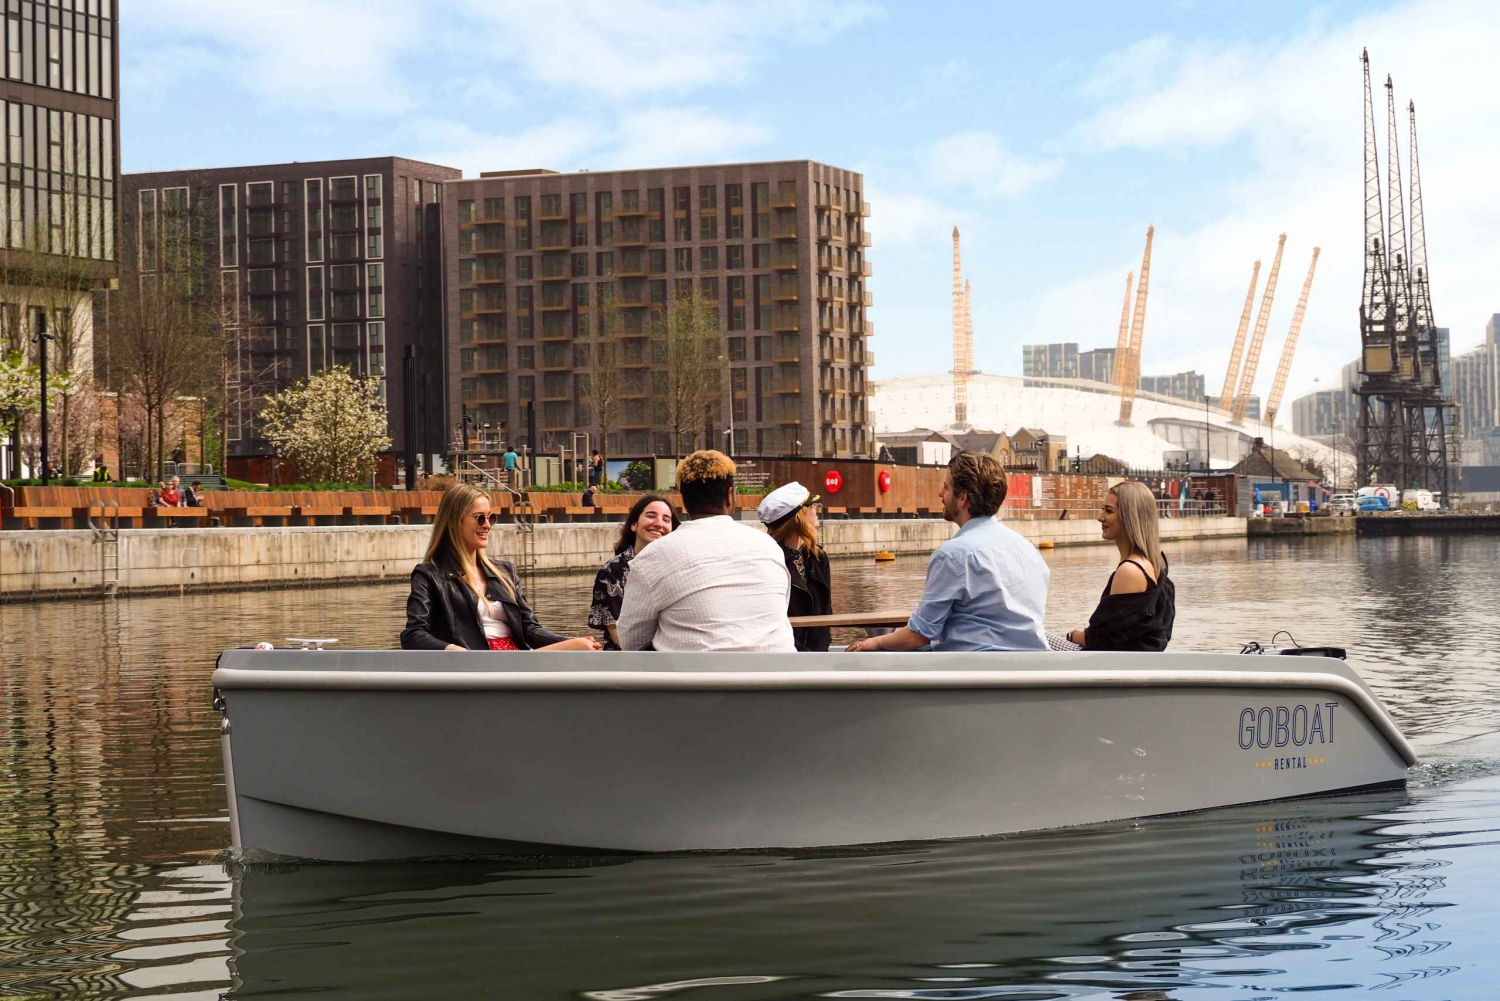 Lontoo: London Docklands: GoBoat vuokraus Canary Wharfissa London Docklandsissa